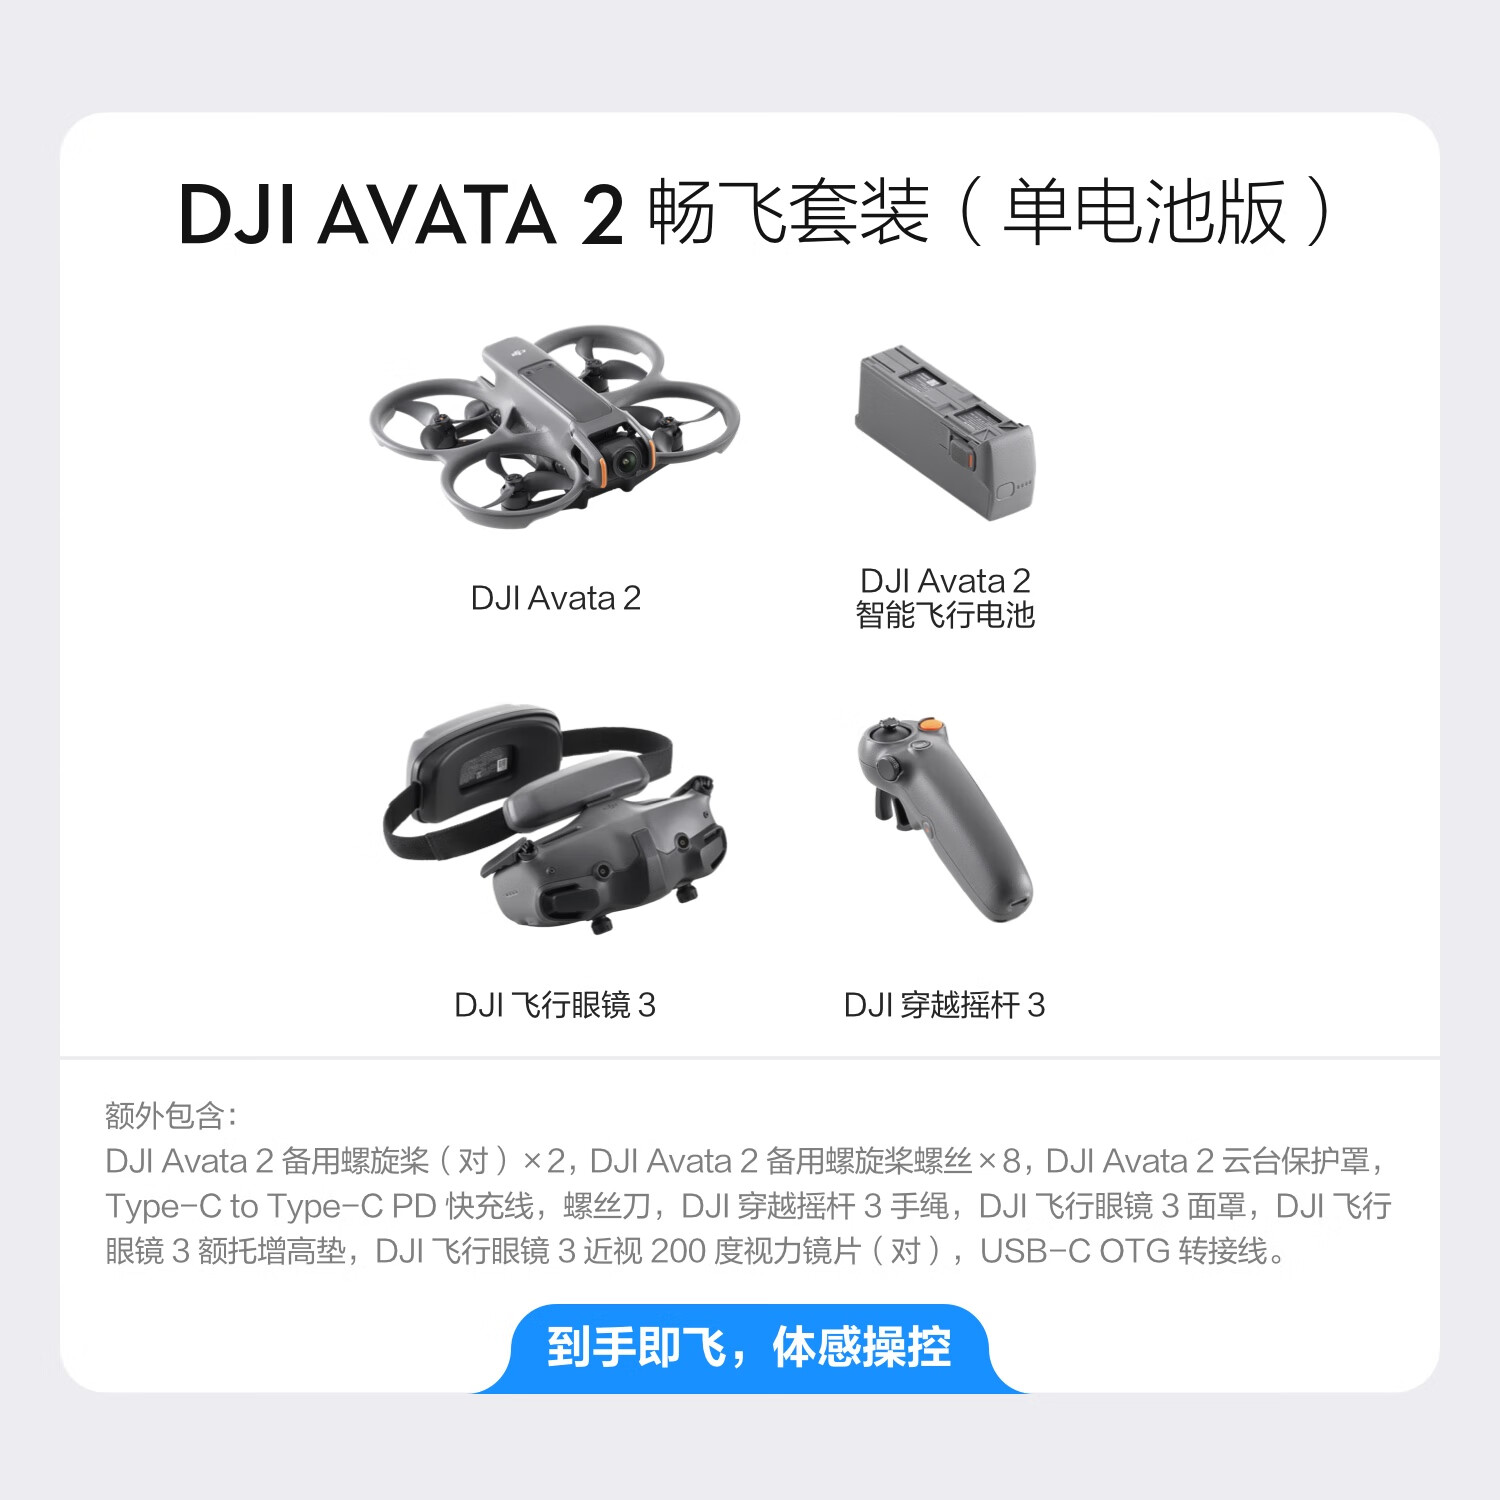 DJI 大疆 Avata 2 畅飞套装（单电池版）第一视角航拍无人机 飞行眼镜体感操控沉浸式飞行体验 5988元